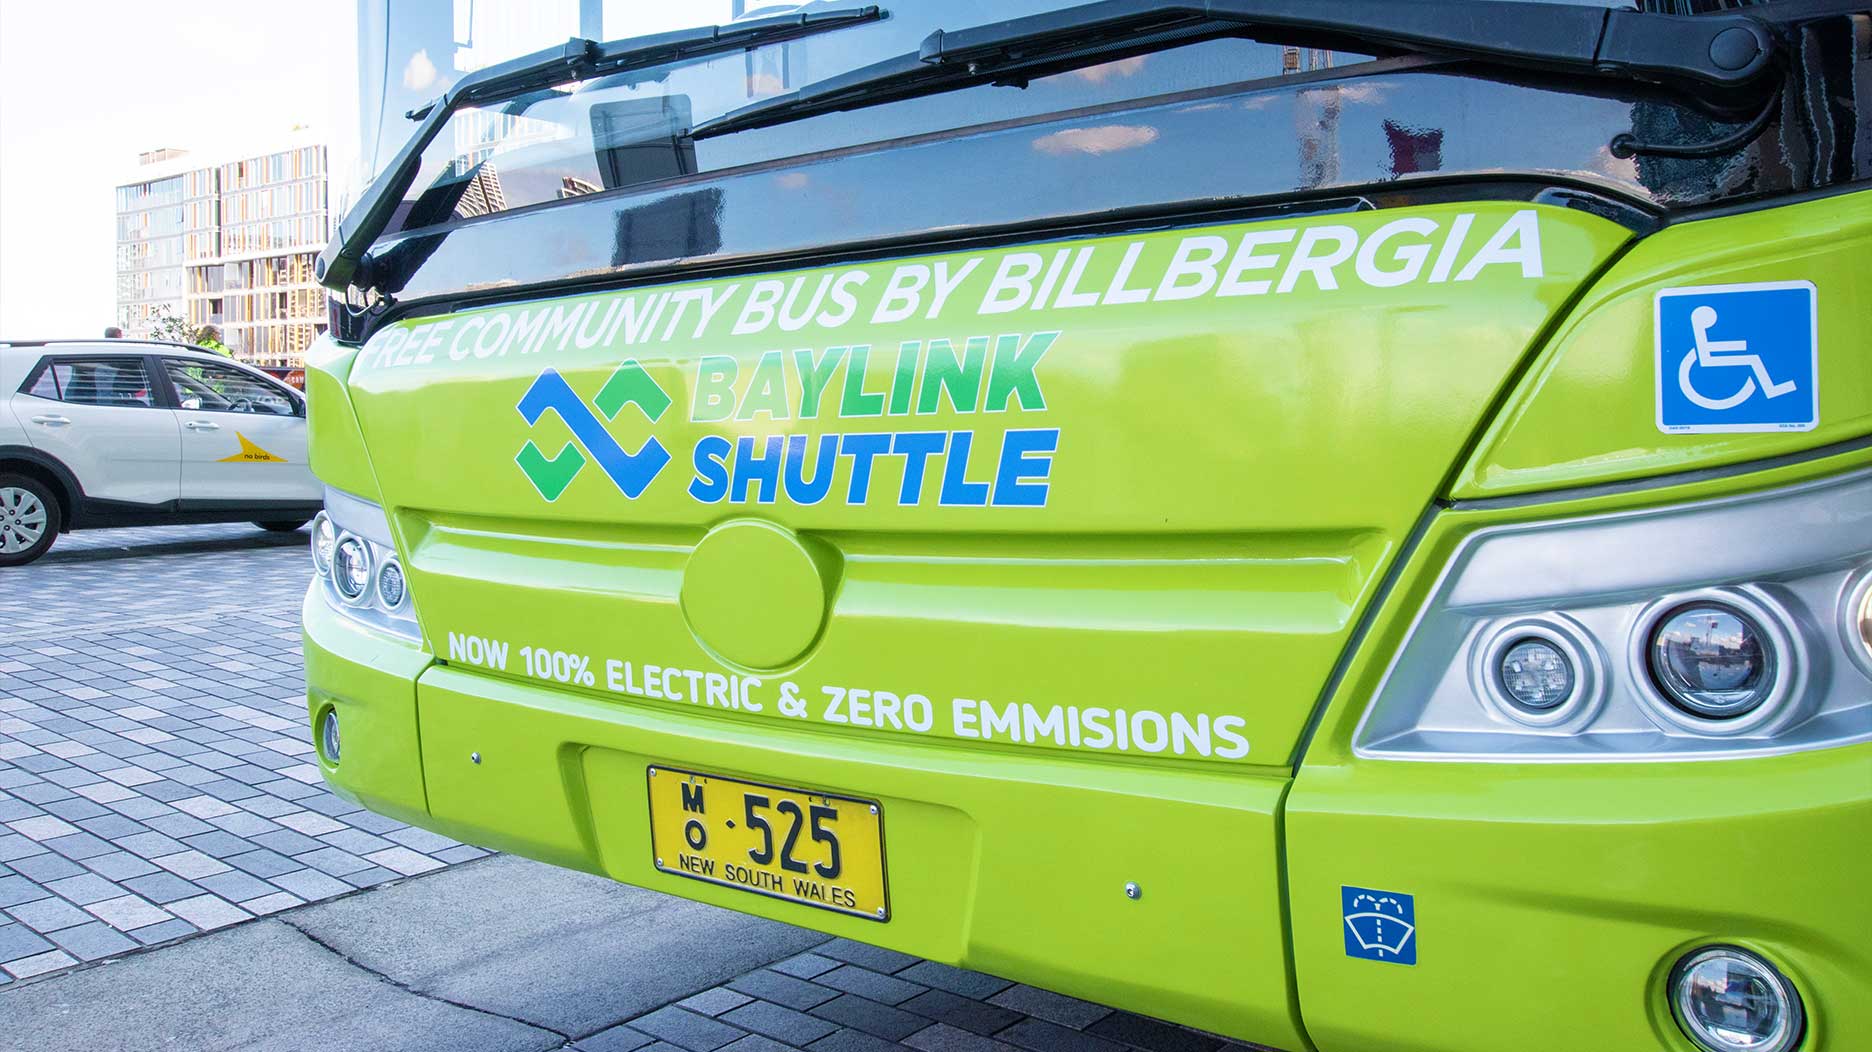 Billbergia Baylink Shuttle 2023 Electric